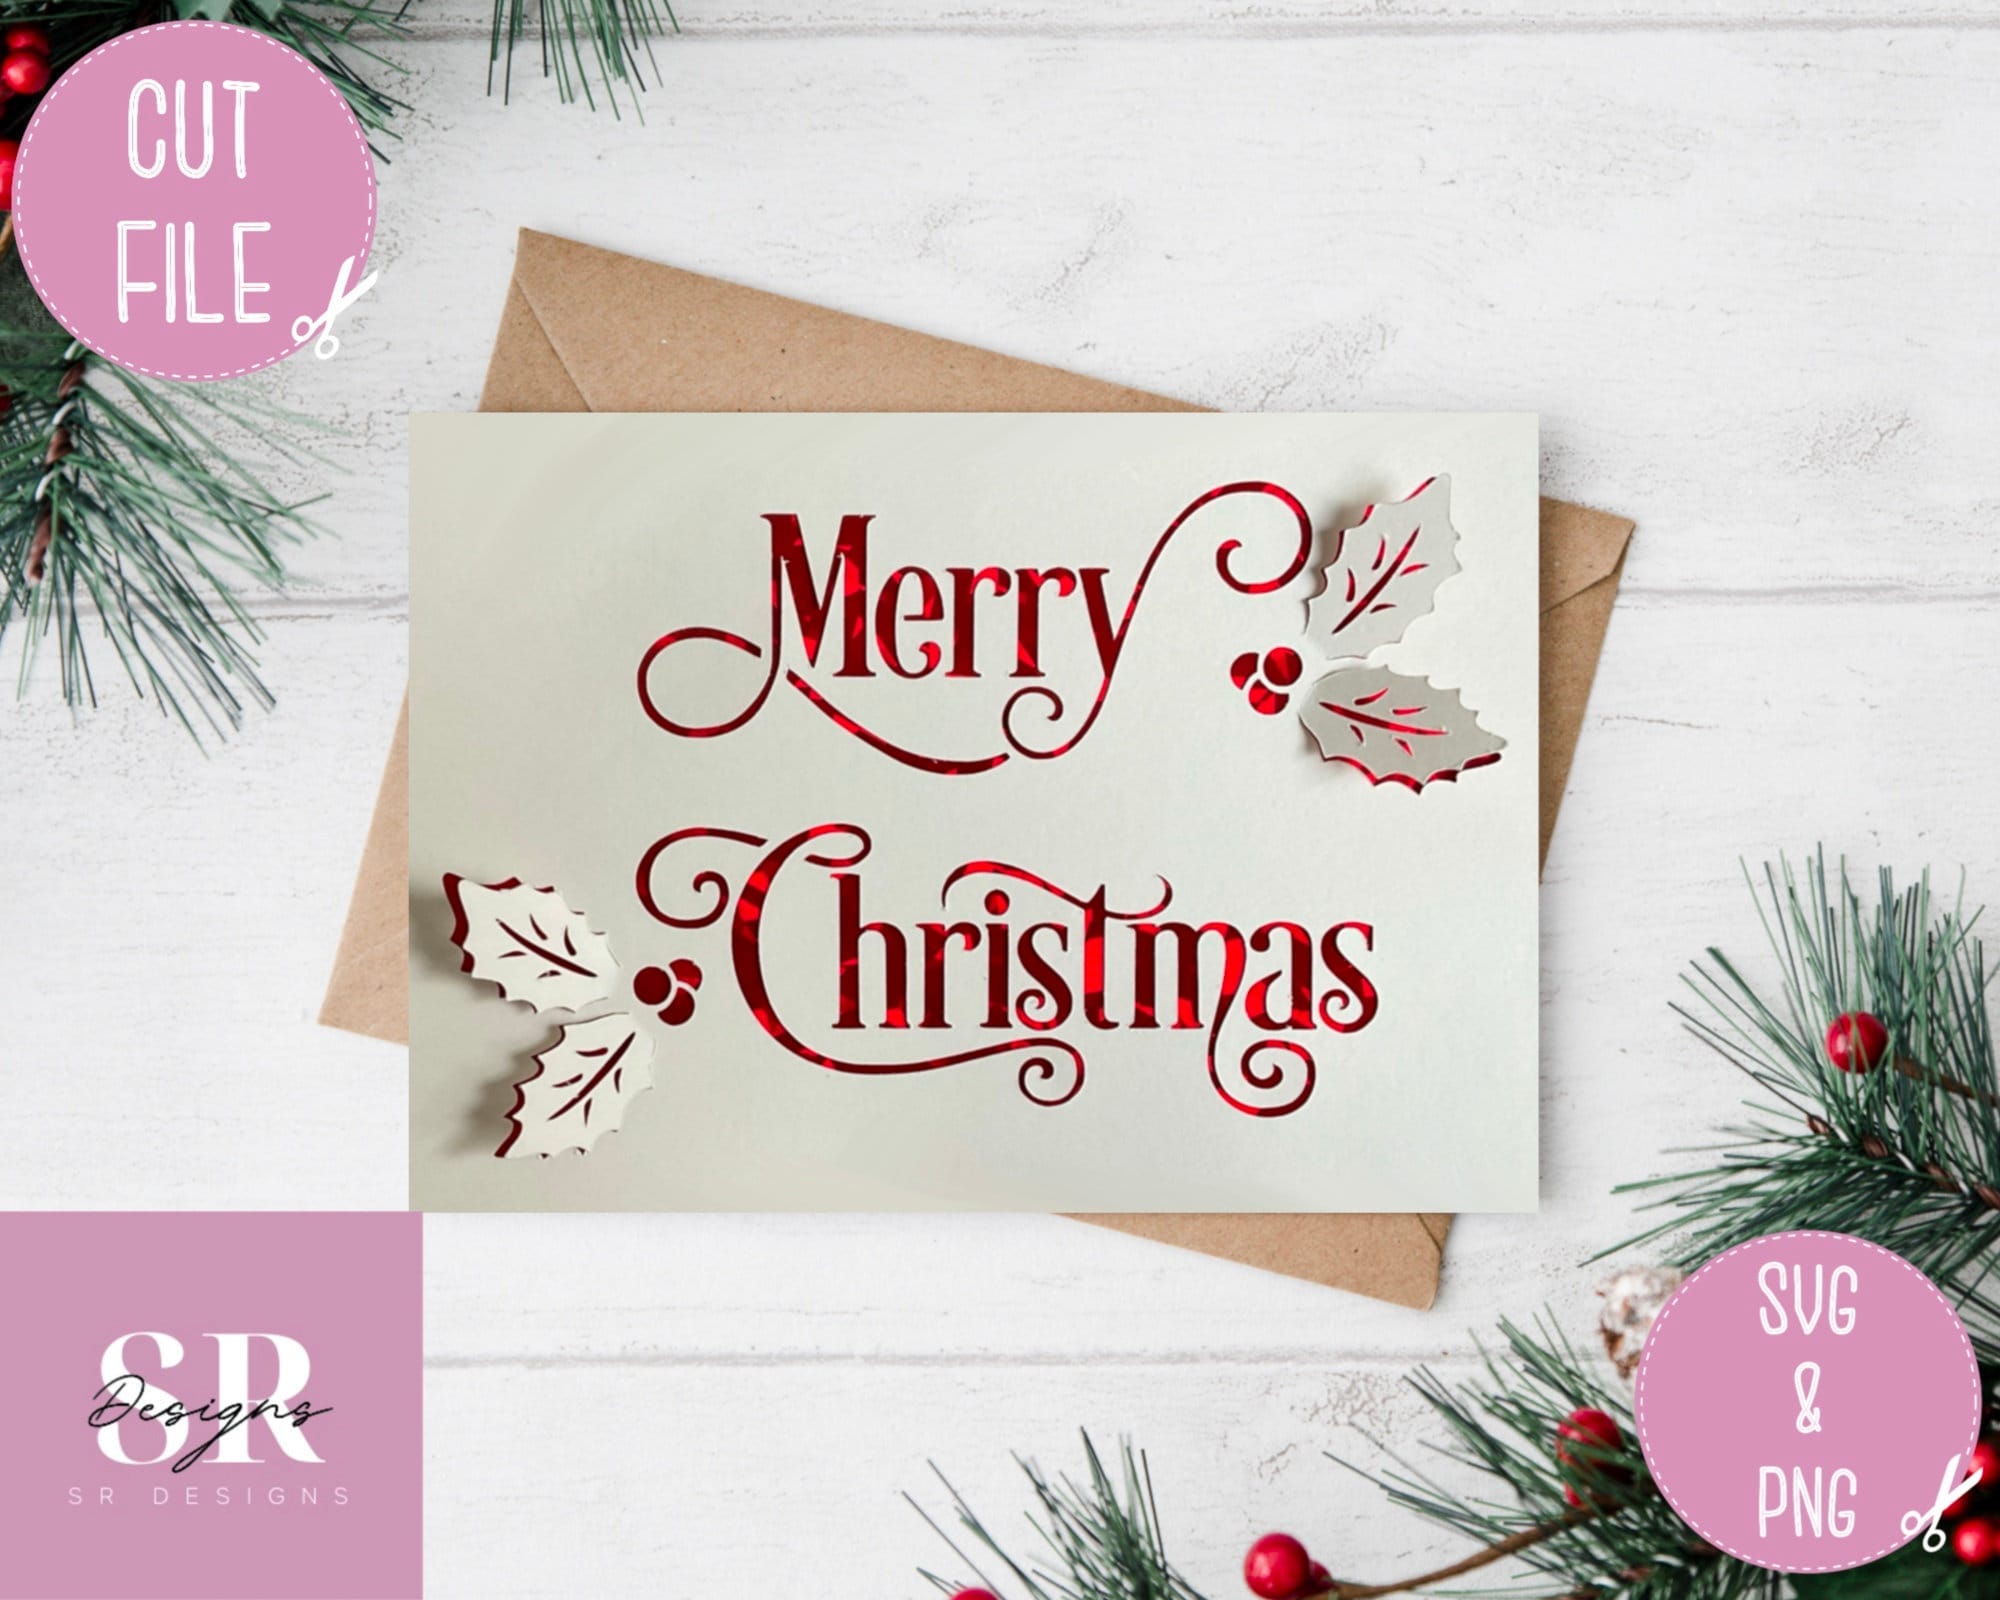 SVG: ‘pop up’/ 3D Christmas card. Christmas card svg. Merry Christmas svg. Pop up flowers. Pop up SVG. 3D card svg. Cricut card